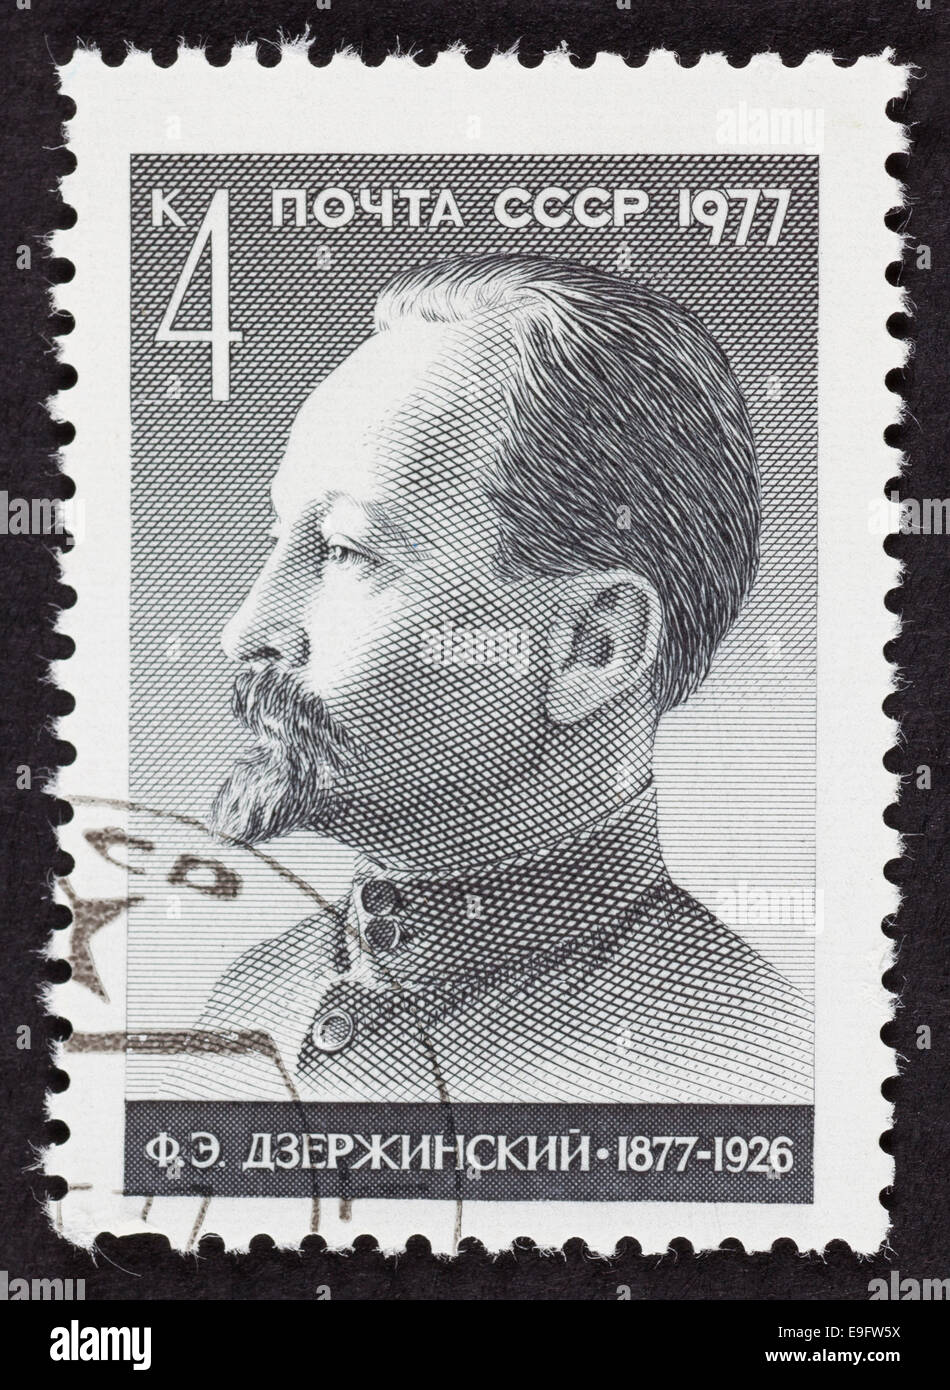 USSR postage stamp Felix Edmundovich Dzerzhinsky. 1977 year. Black background. Stock Photo